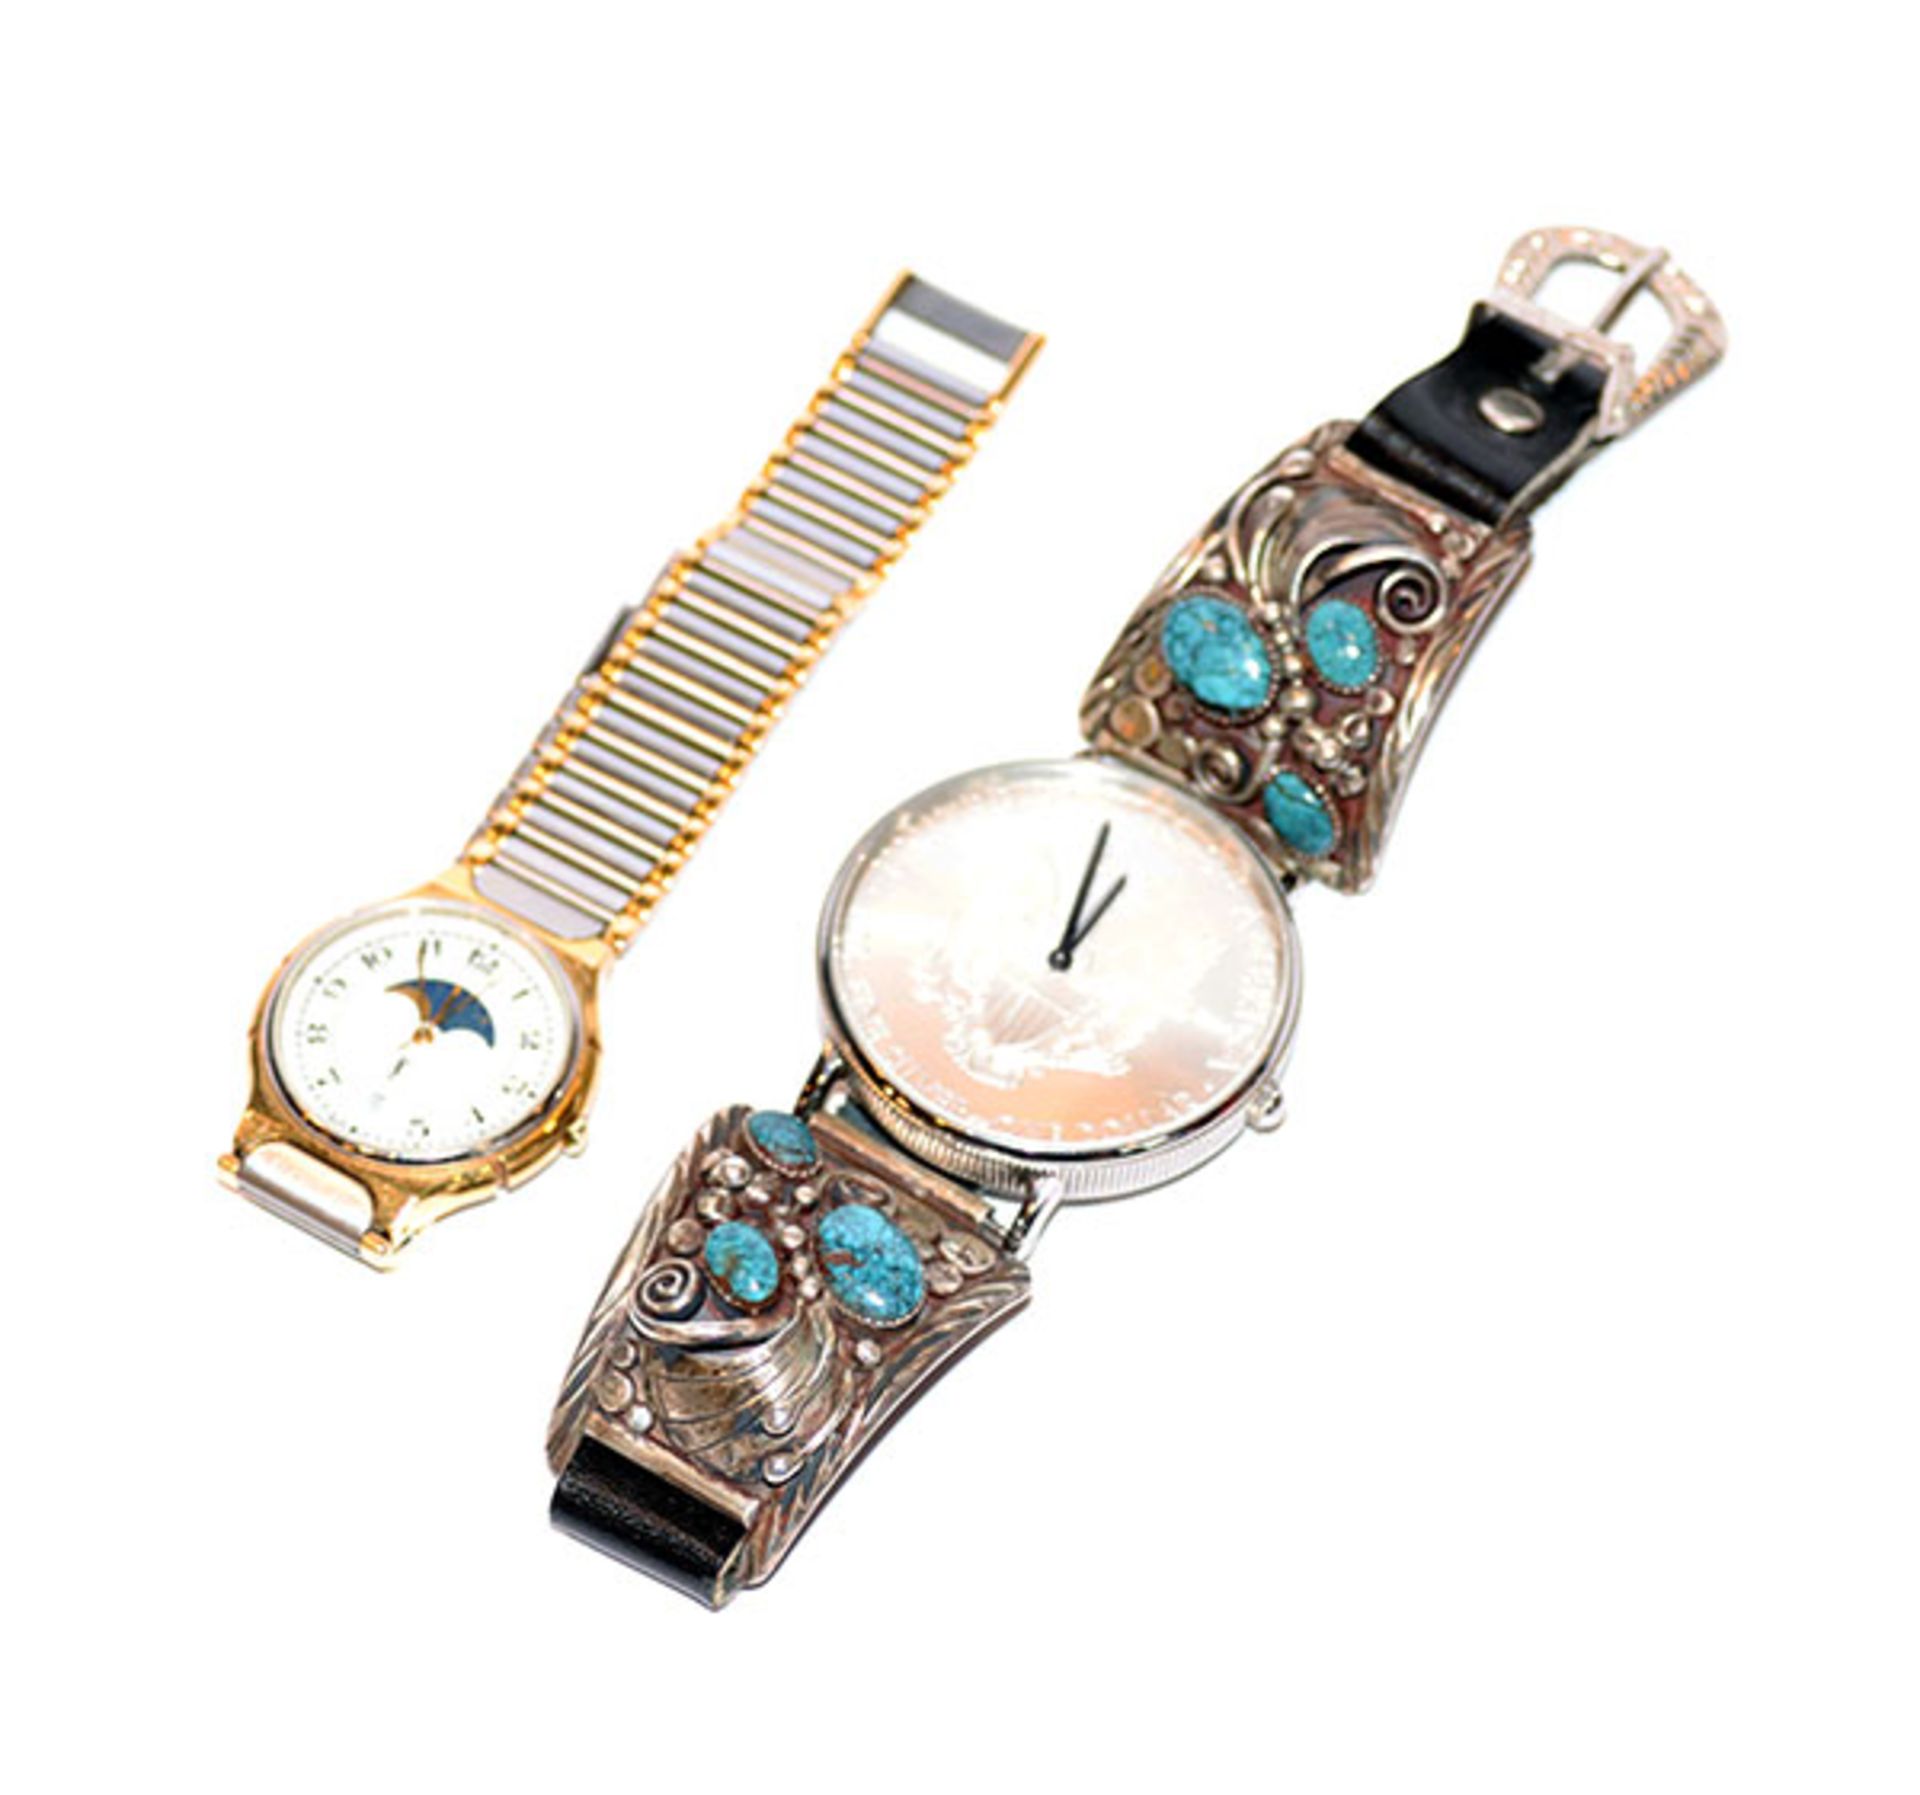 Armbanduhr, Zifferblatt ev. Silber in Silberdollar-Optik an Leder/Metall Armband mit Türkisen, und